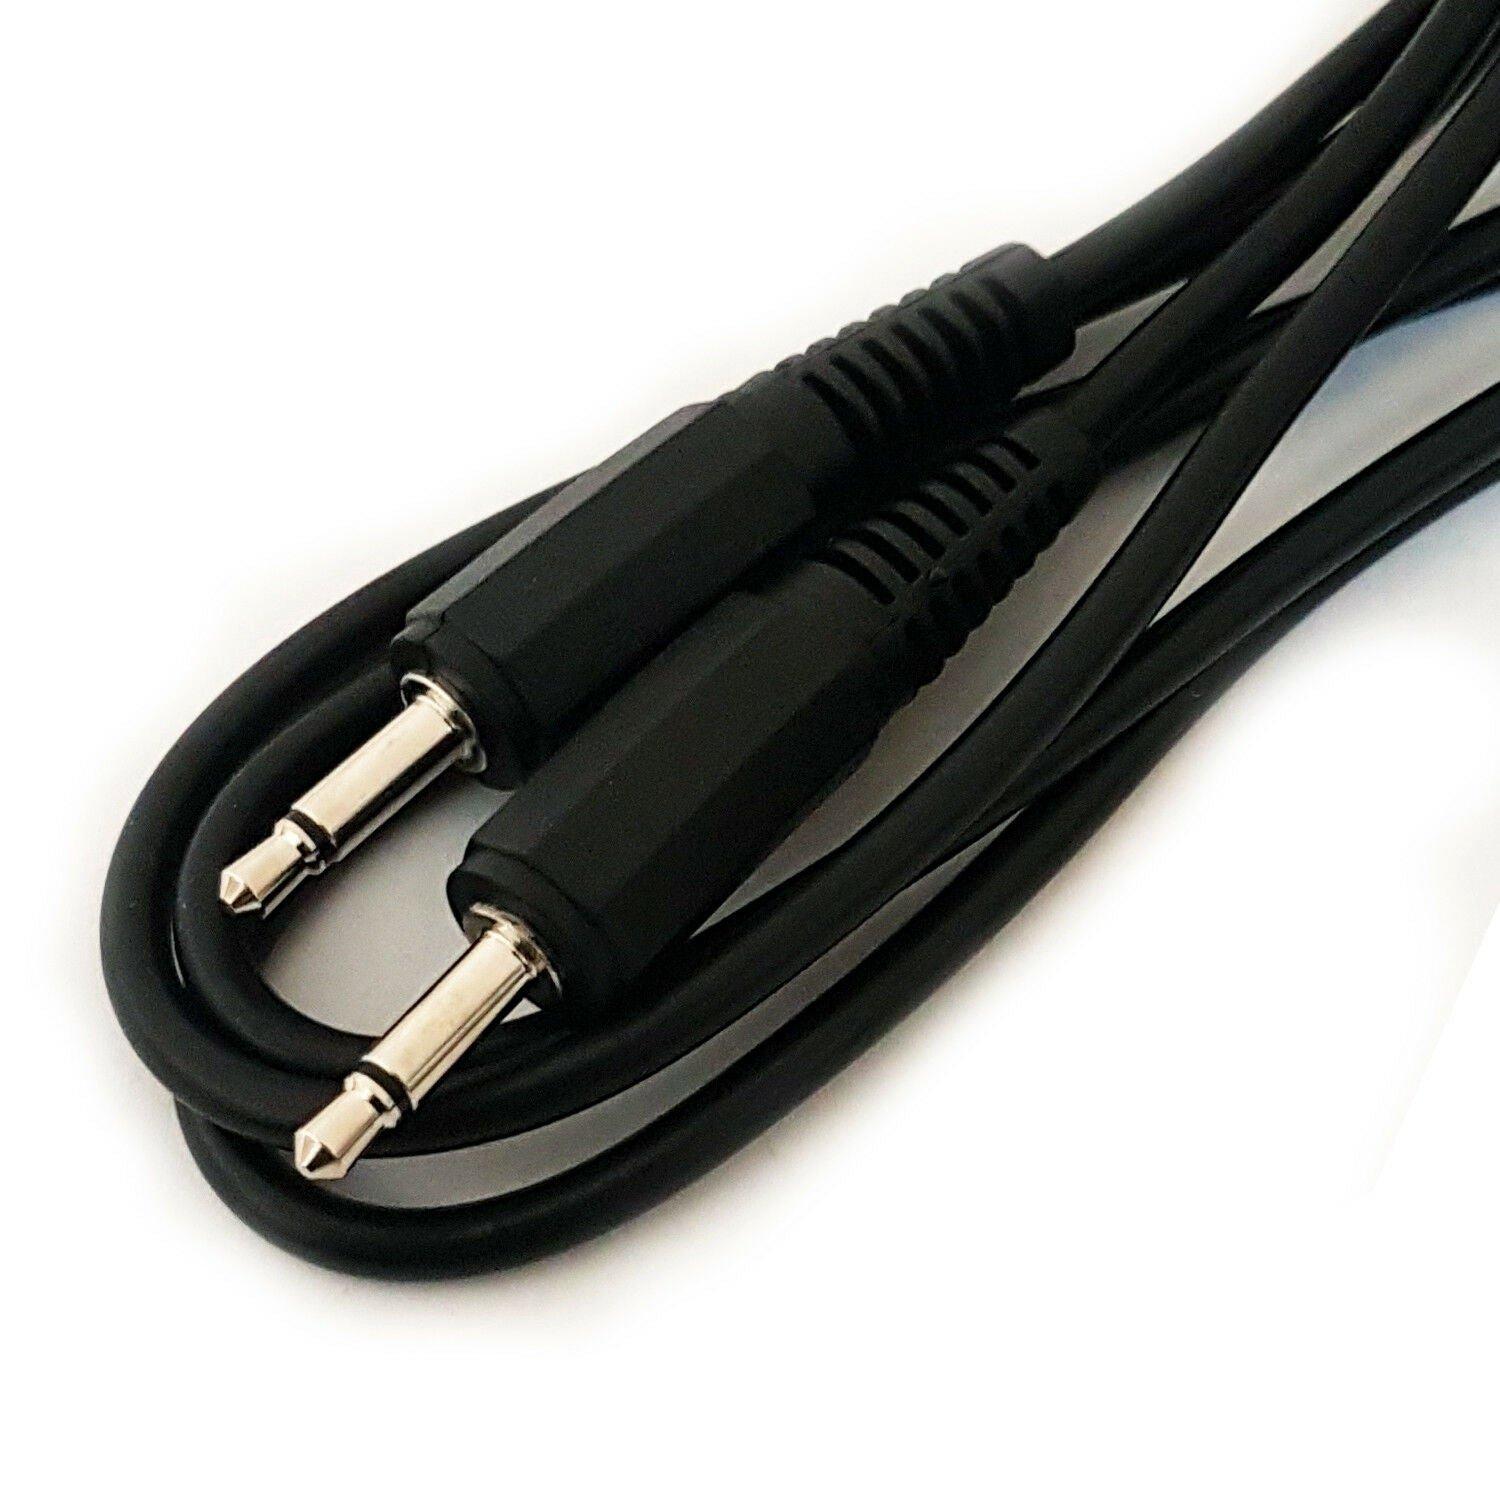 5m 3.5mm Mono Male to Plug Cable Lead AUX Mixer Audio Signal Speaker Jack Wire